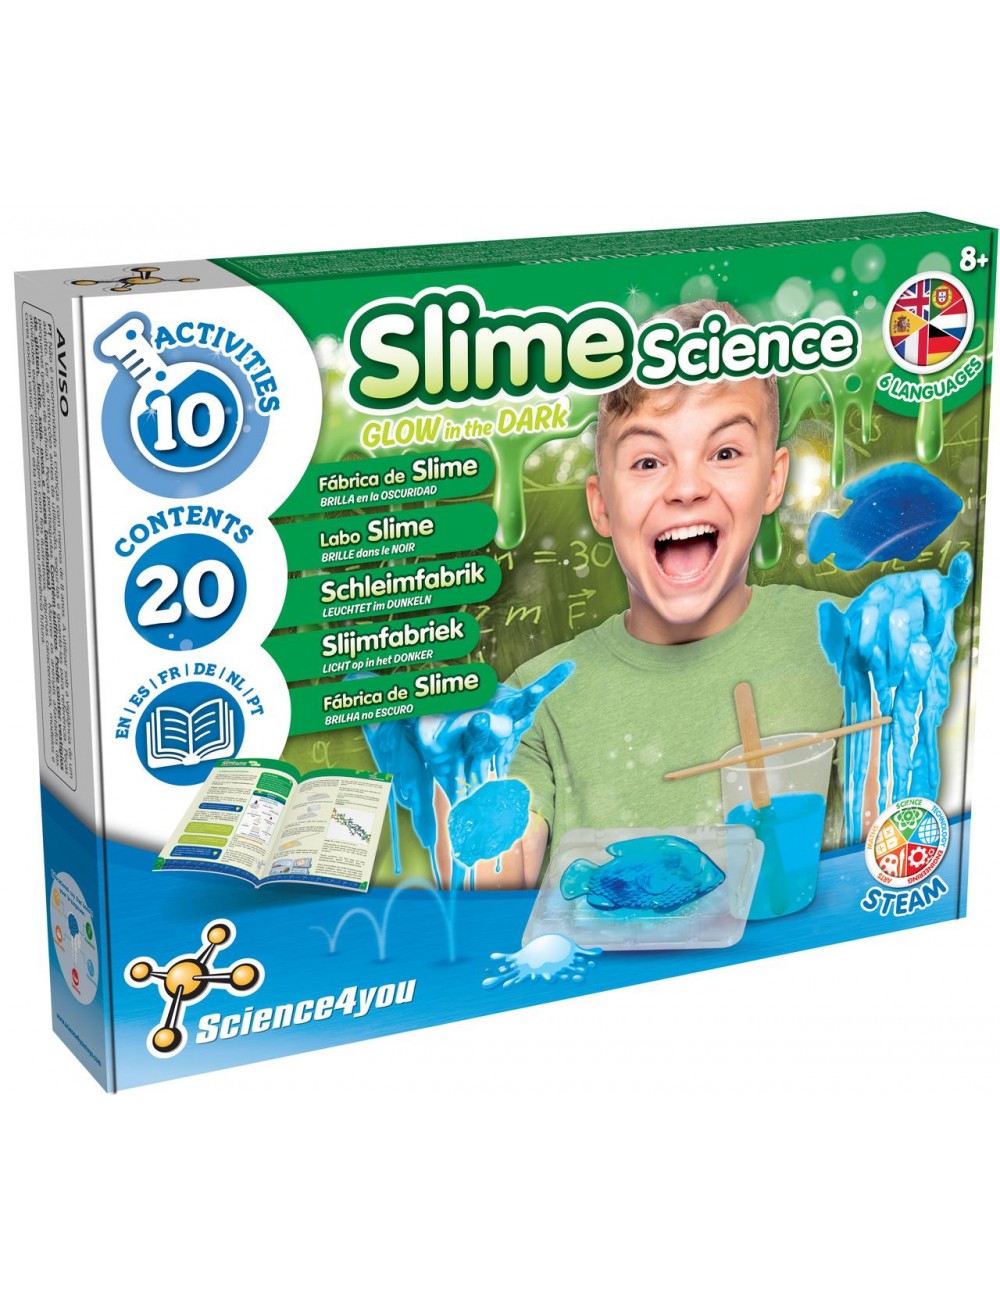 Science4you STEM Slime Factory Glow In The Dark Create Amazing Slimes